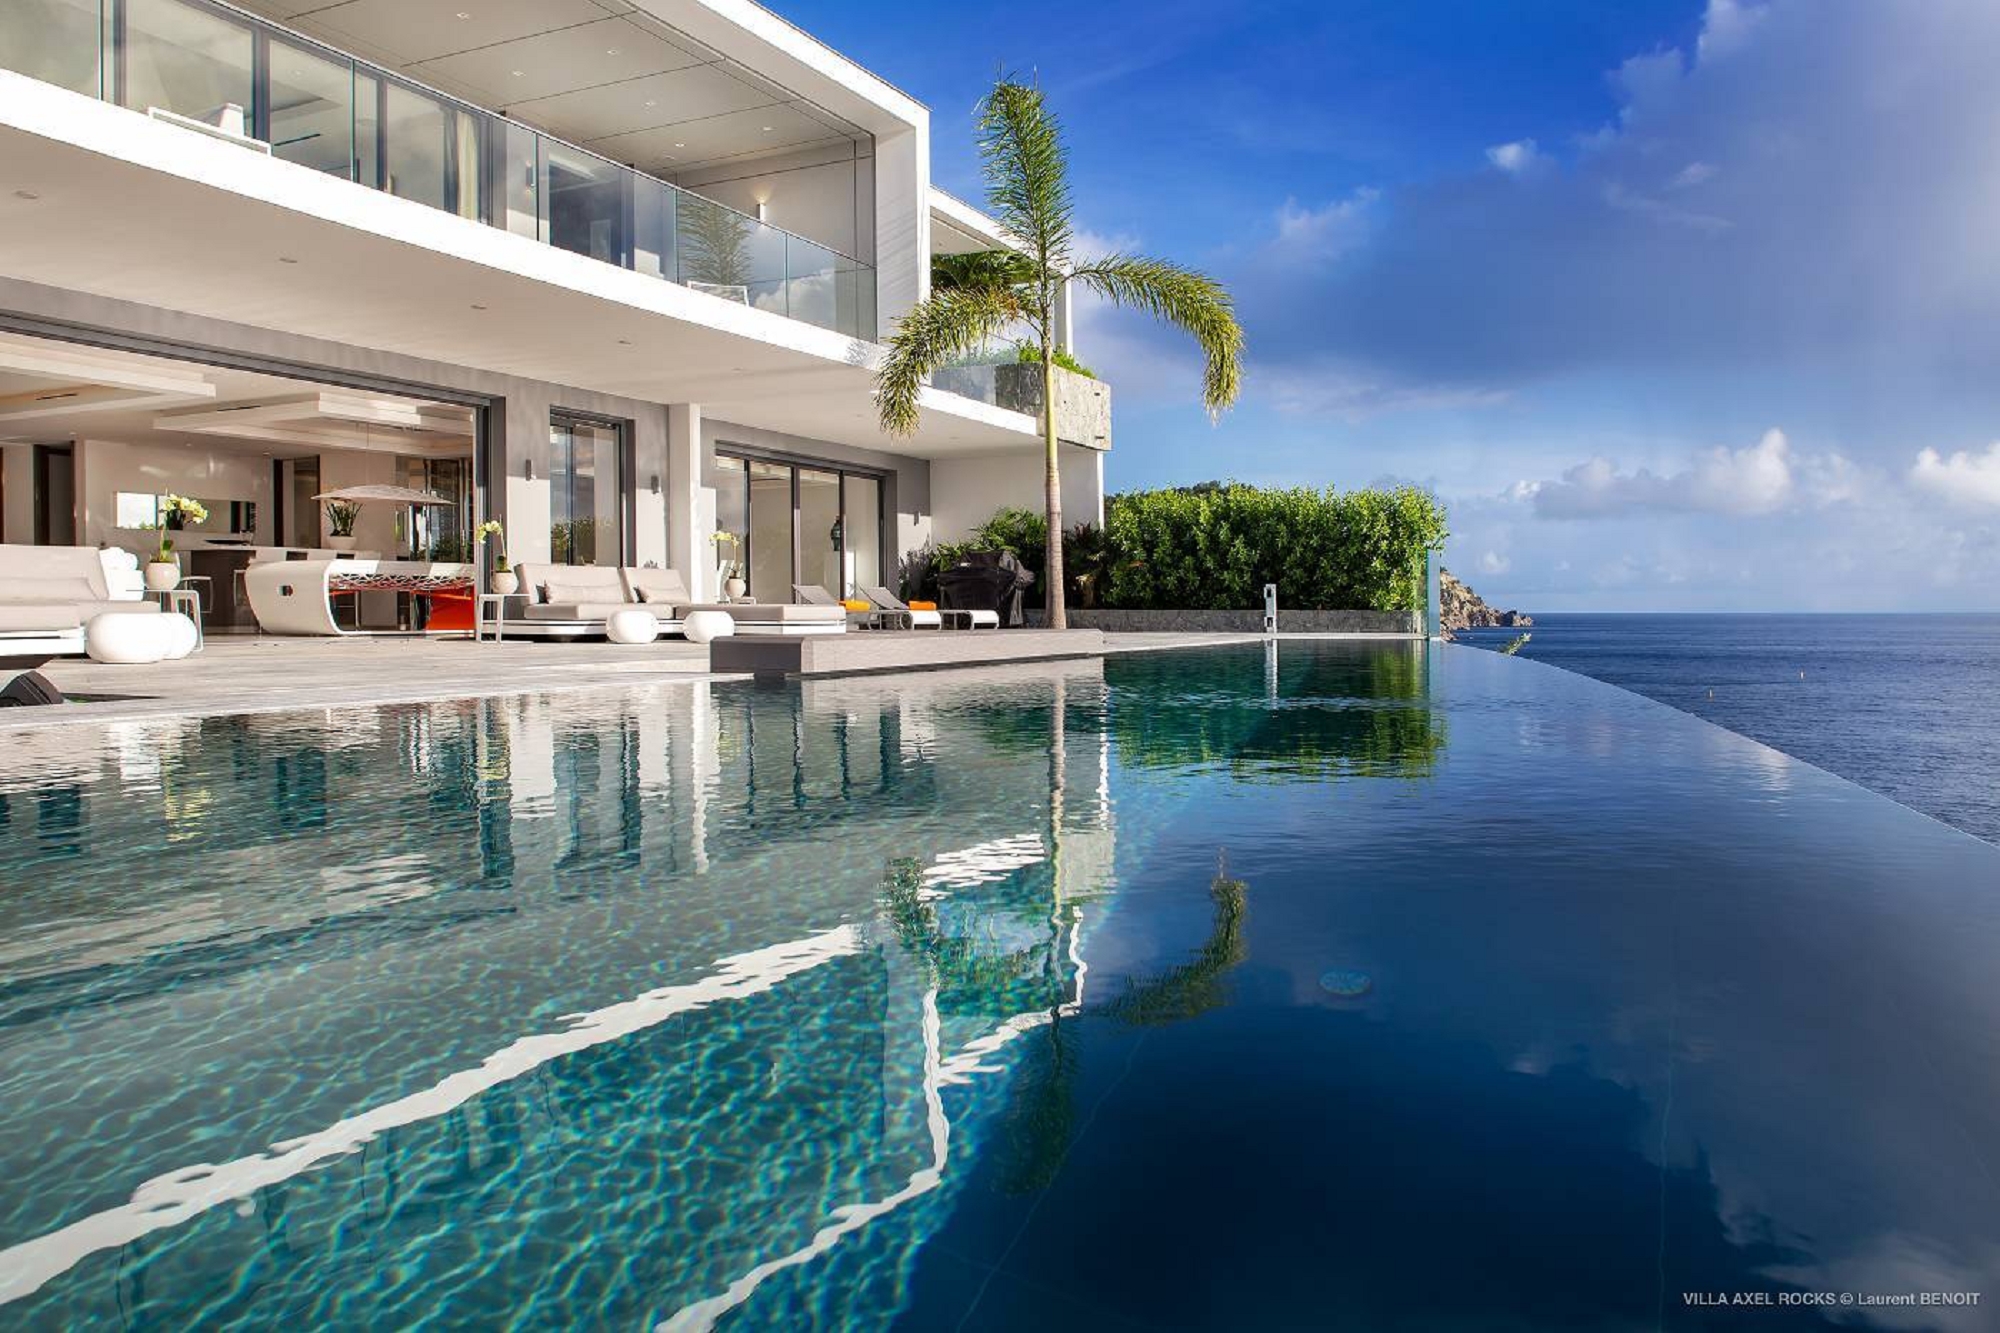 Villa Axel Rock 4 BR - Gustavia, St Barth / St Barts rental For Super Rich